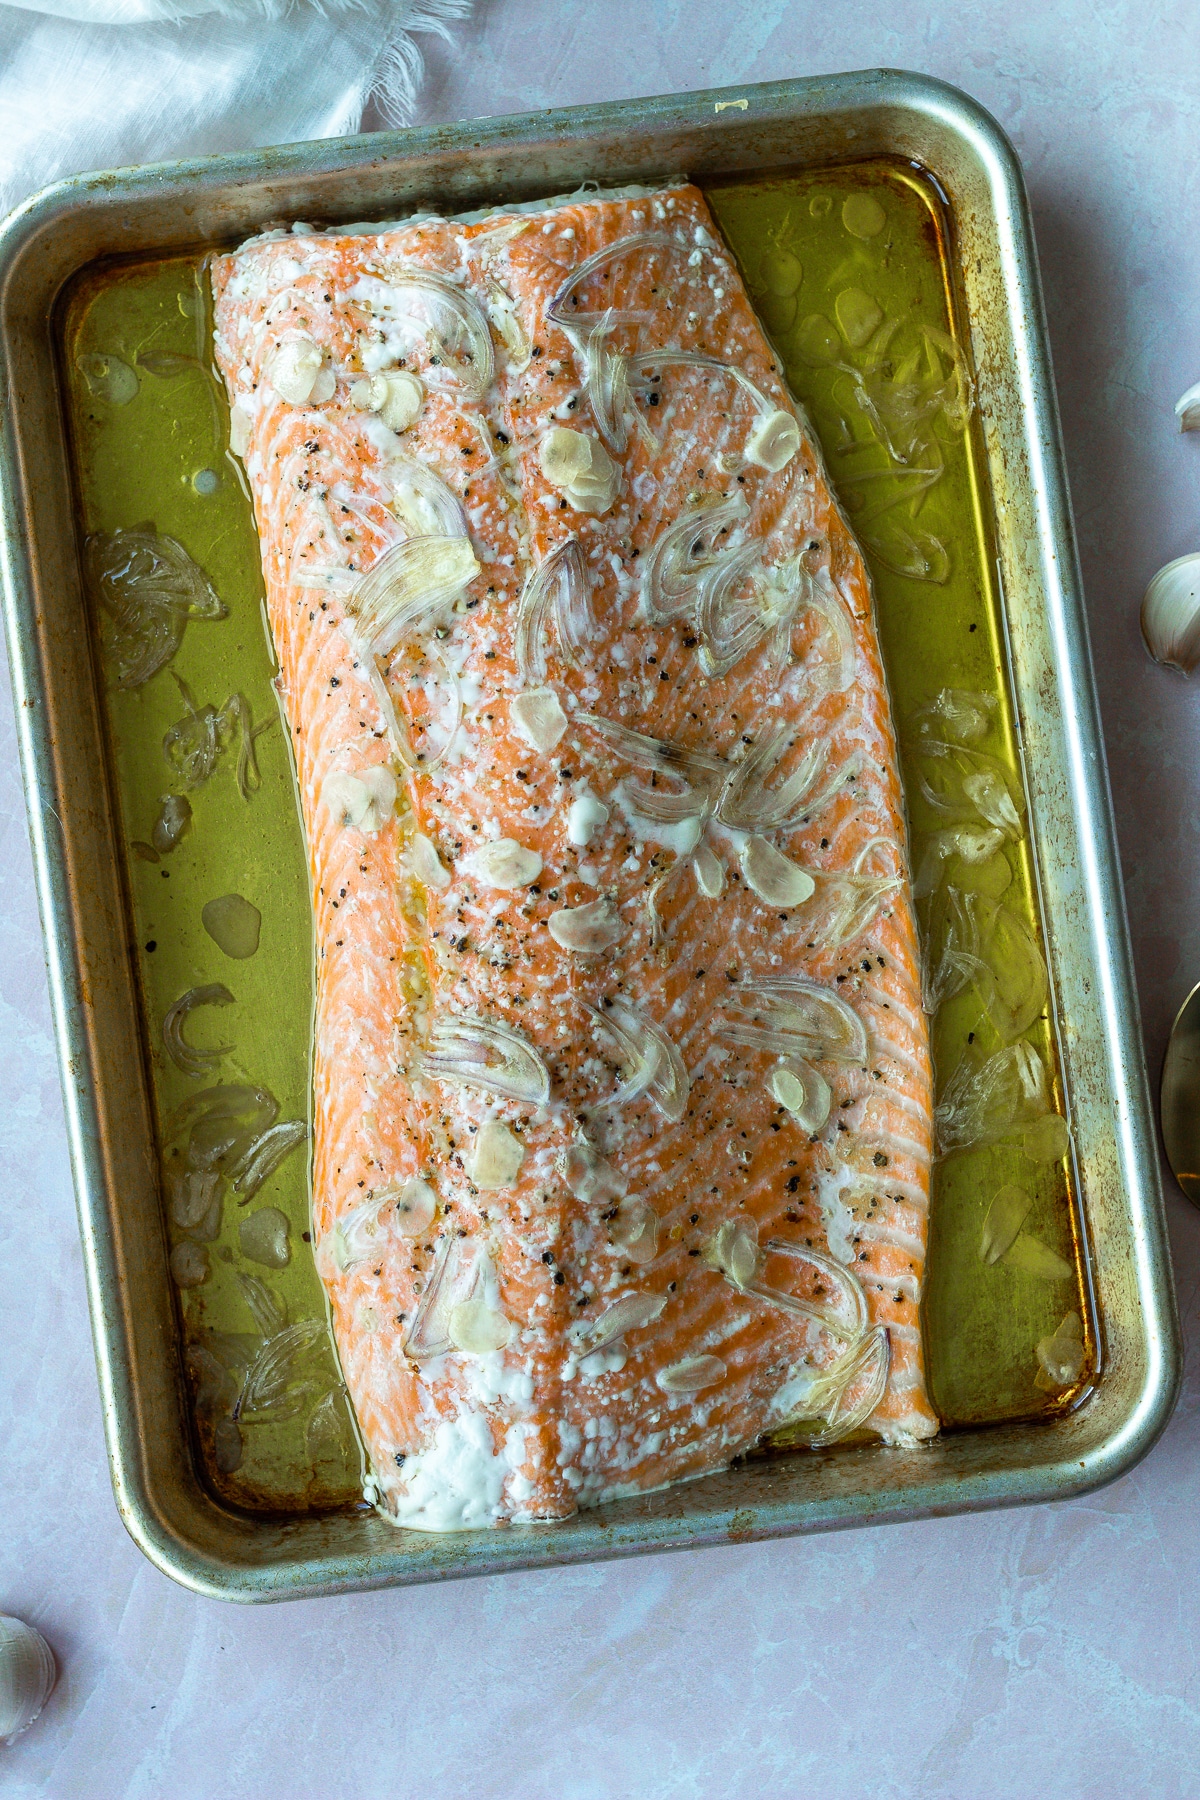 Slow baked salmon on baking sheet.